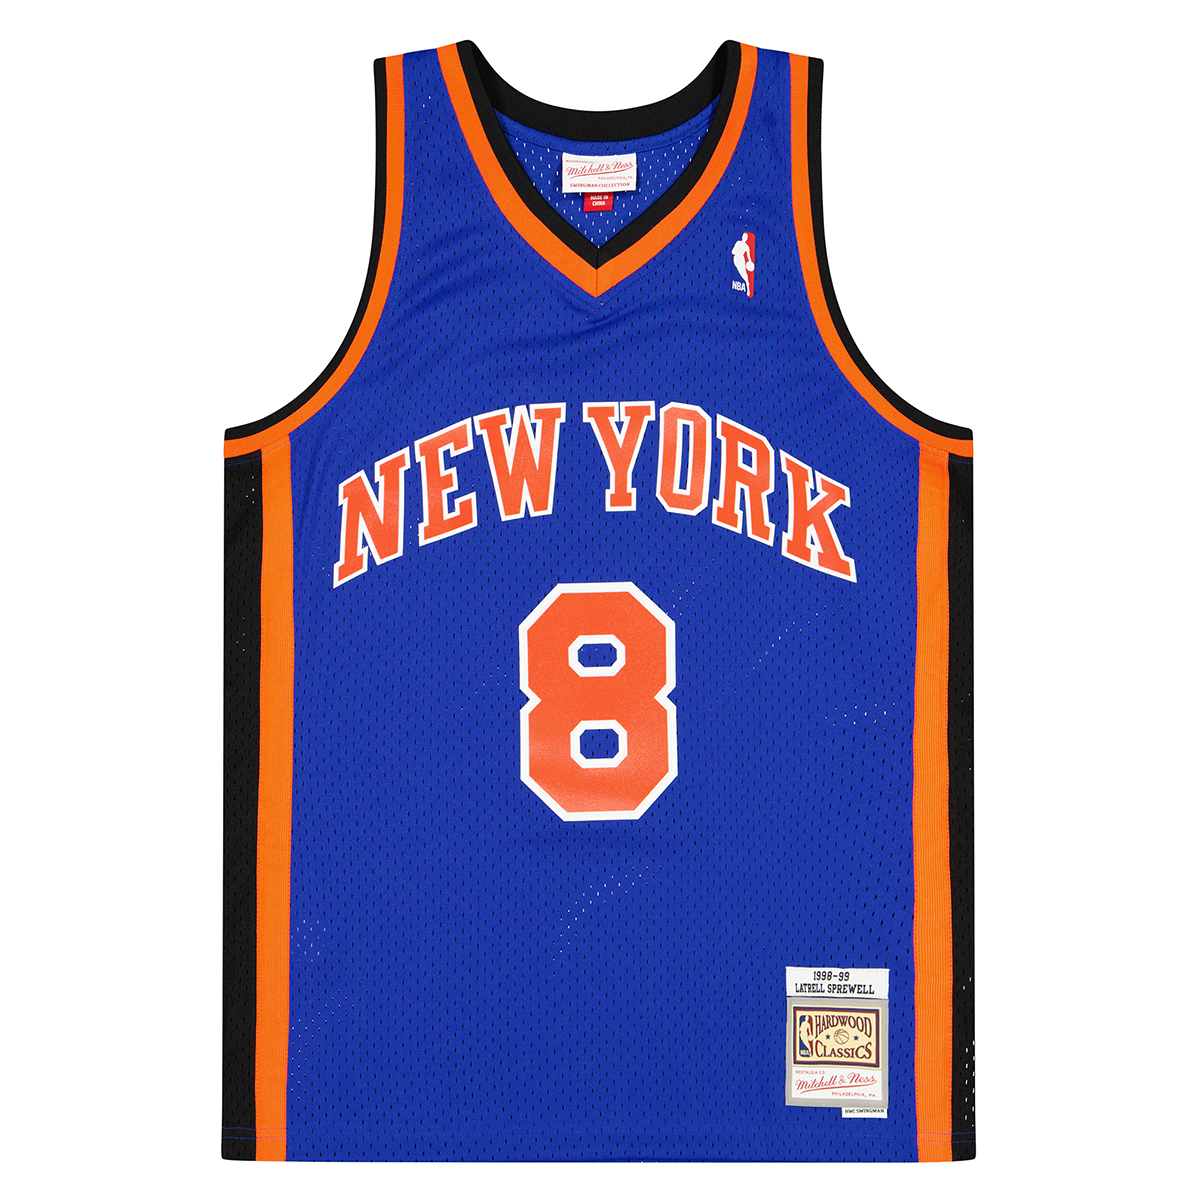 Mitchell And Ness Nba Swingman Jersey New York Knicks 98-99 - Latrell Sprewell, Royal Blue